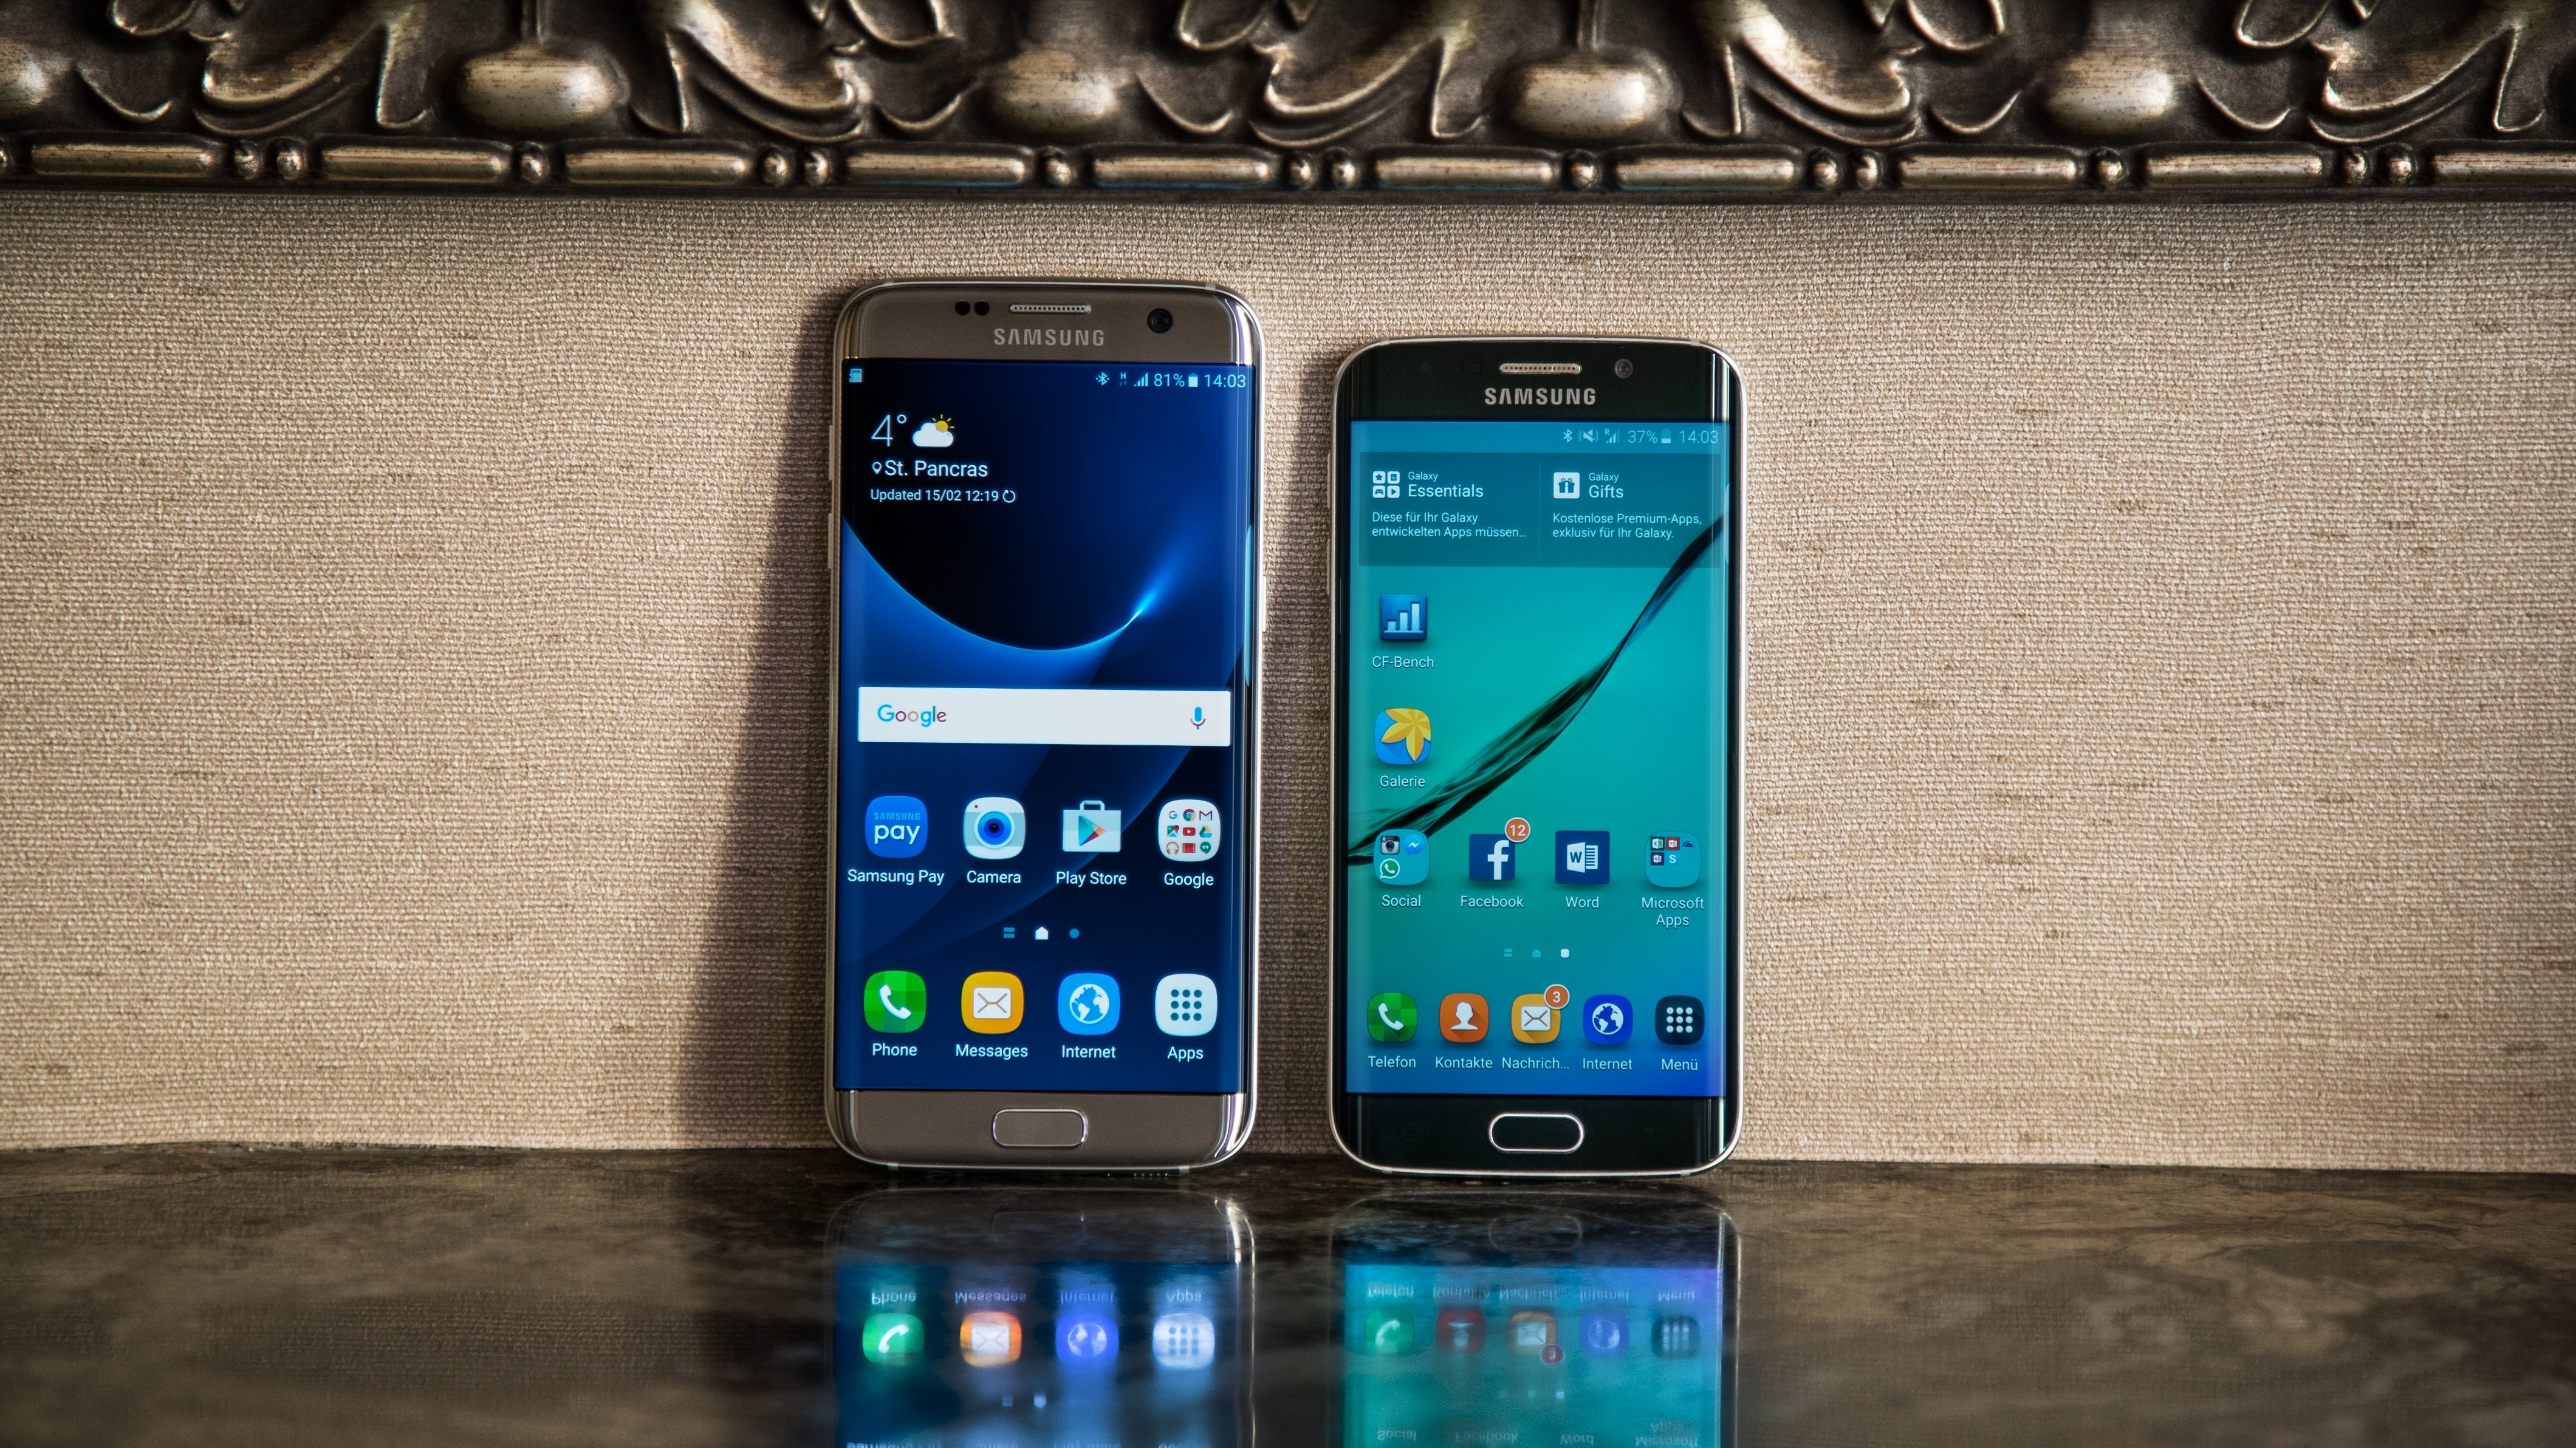 Самсунг галакси с 24 характеристики. Samsung Galaxy s7. Galaxy s7 Edge. Самсунг галакси s7 Edge. Samsung Galaxy 7 Edge.